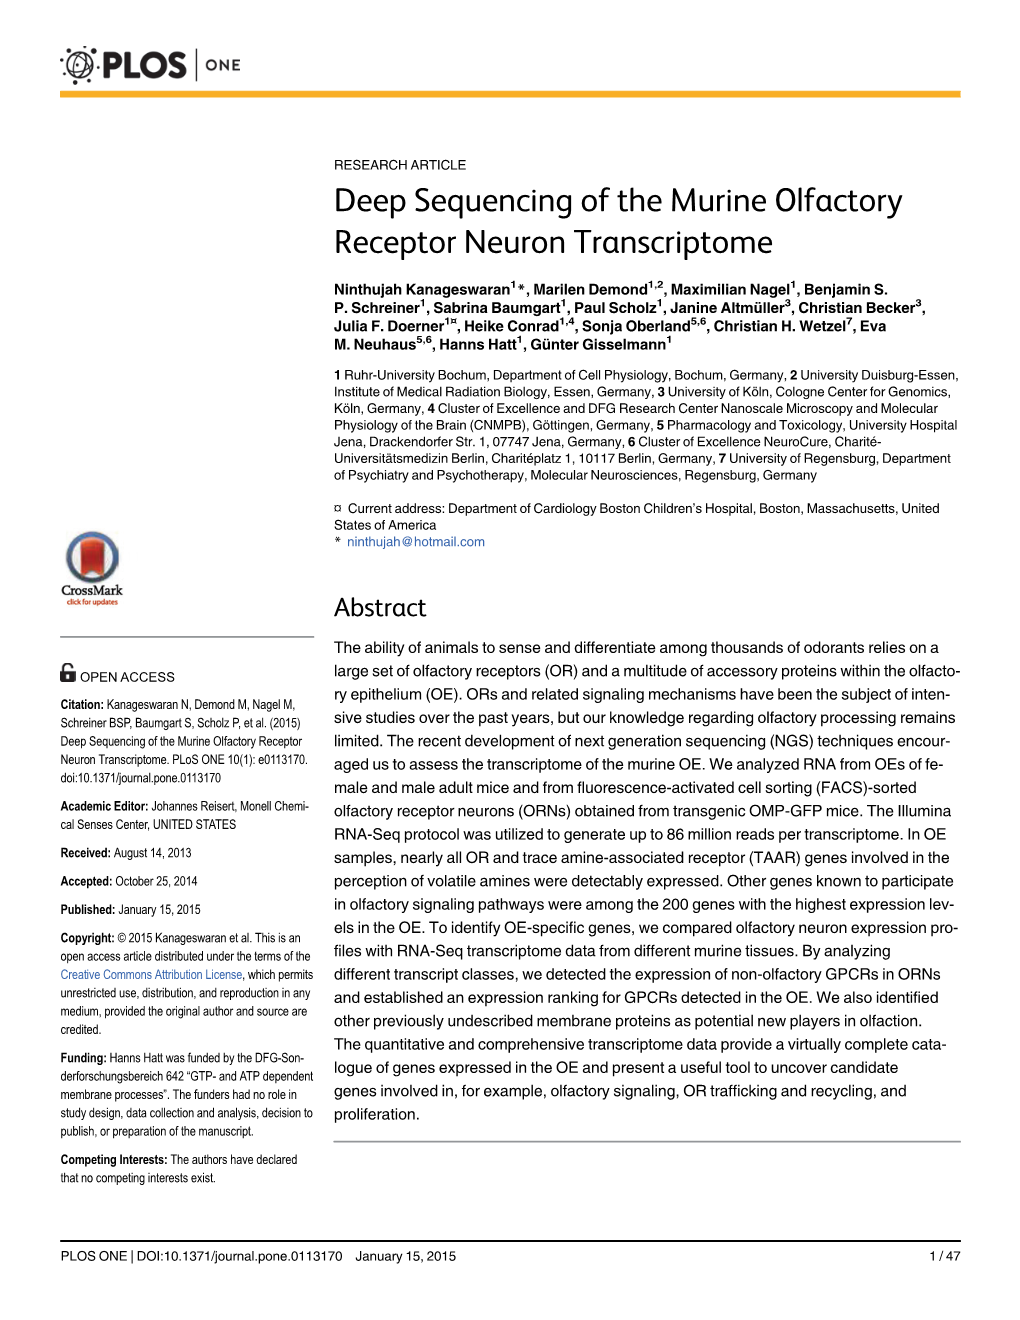 Deep Sequencing of the Murine Olfactory Receptor Neuron Transcriptome